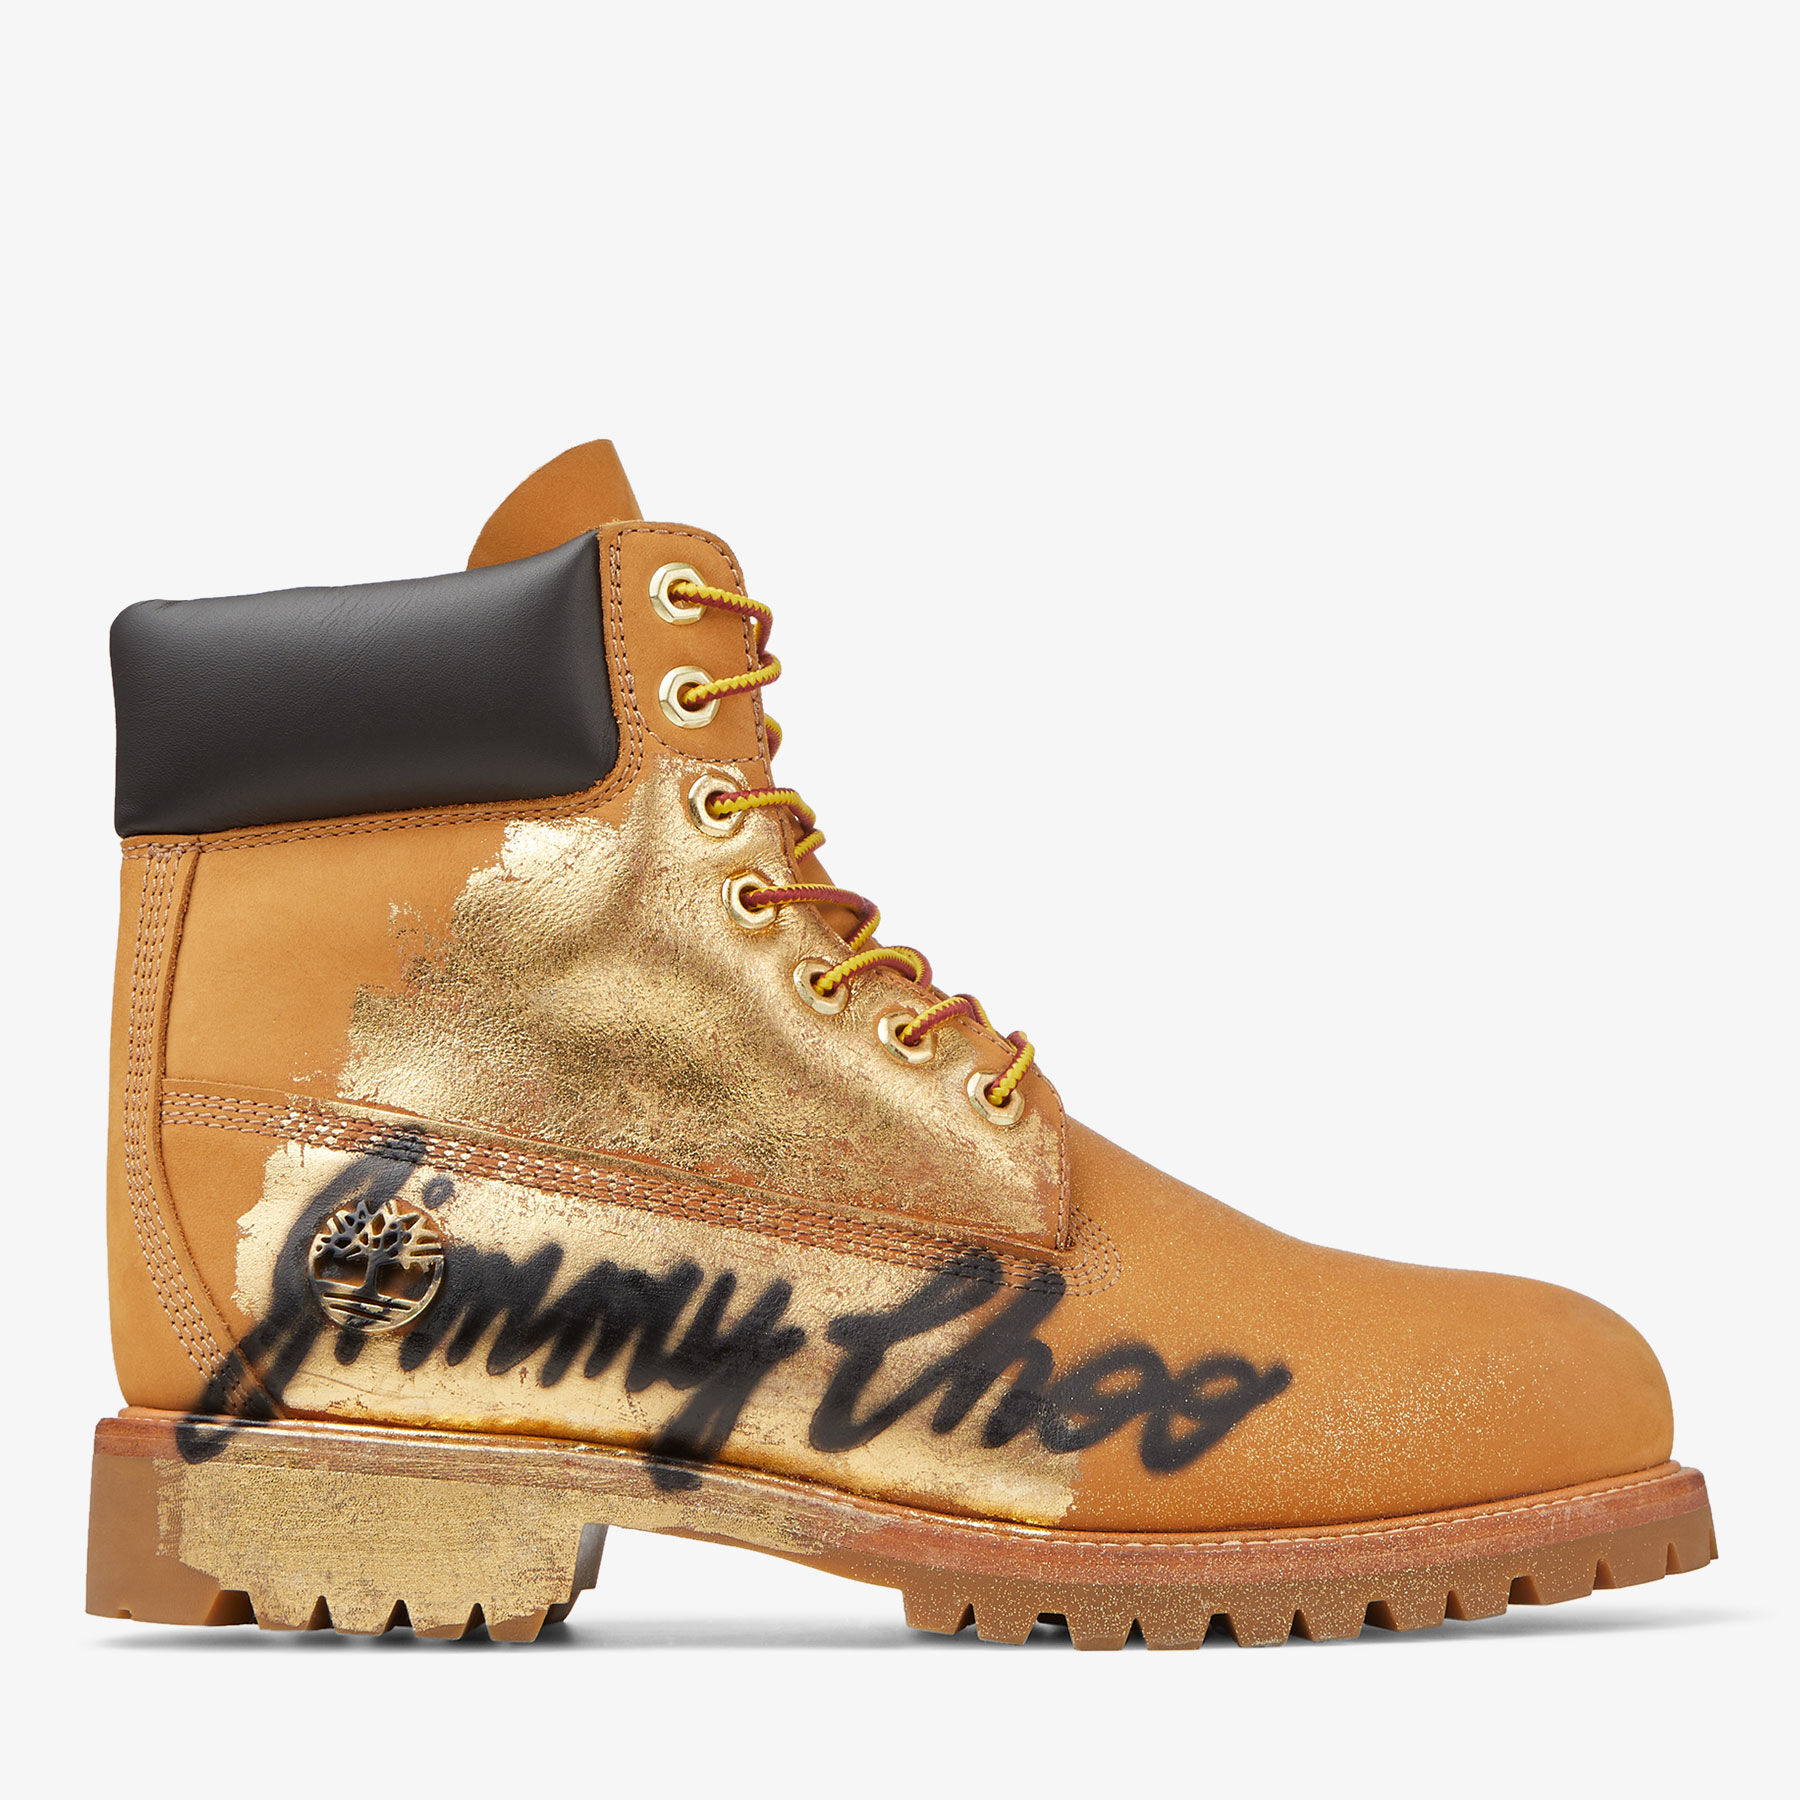 Pelagisch Mompelen President Wheat Timberland Nubuck Ankle Boots with Jimmy Choo Graffiti | JIMMY CHOO X  TIMBERLAND 6 INCH GRAFFITI BOOT | Jimmy Choo x Timberland Collection |  JIMMY CHOO